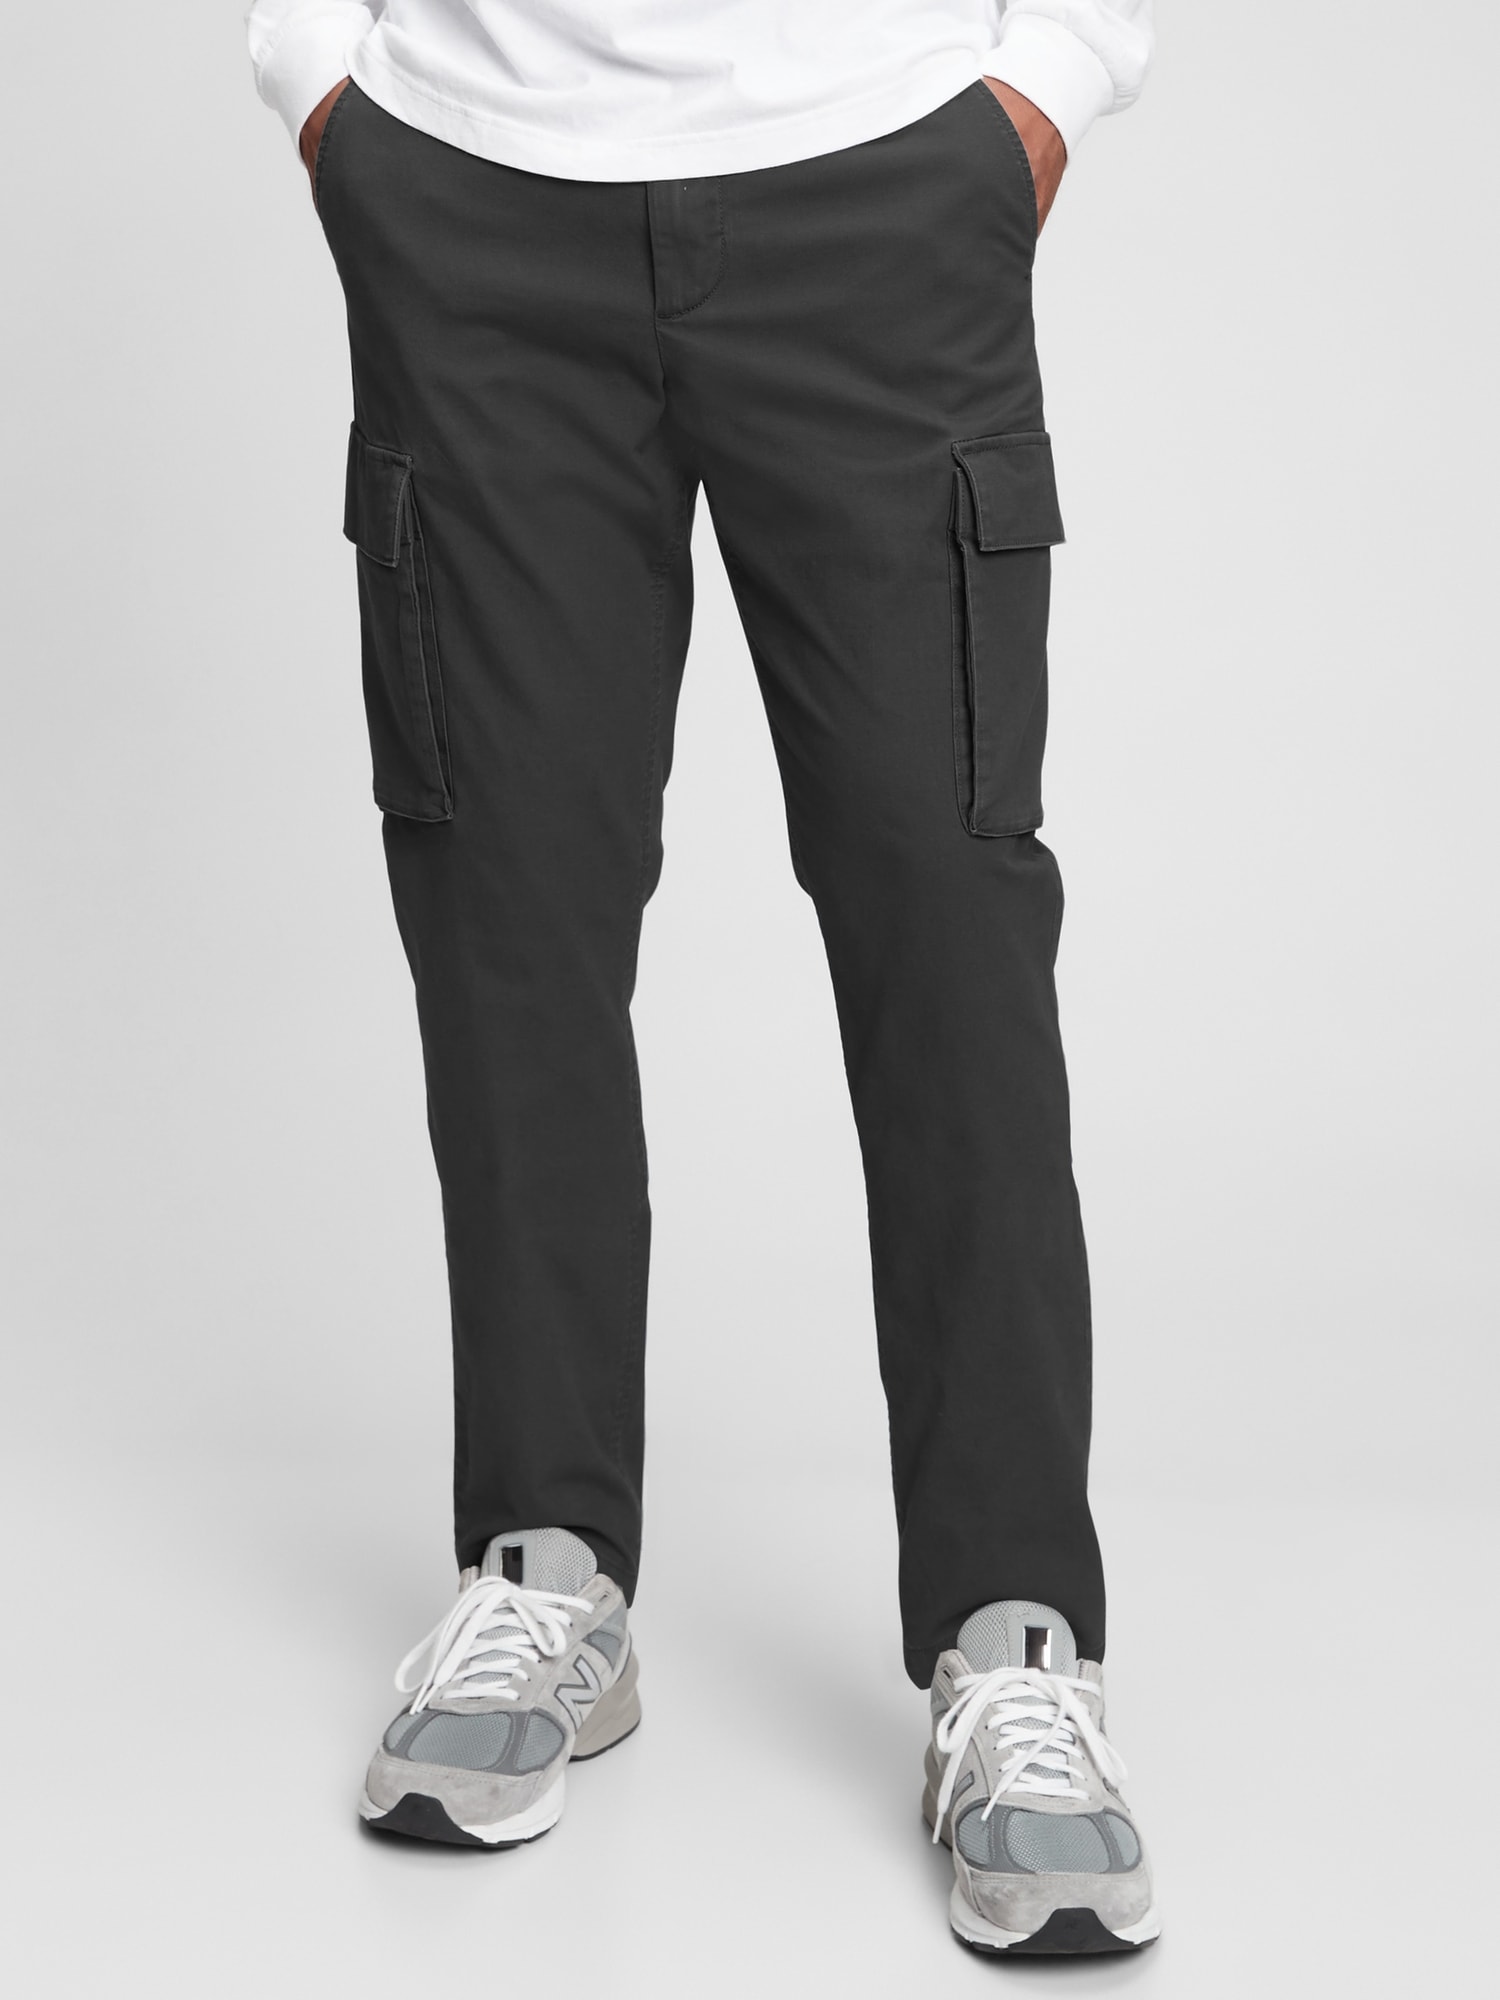 Gap Mens 38x32 Regular Fit Baggy Cargo Pants Beige | eBay